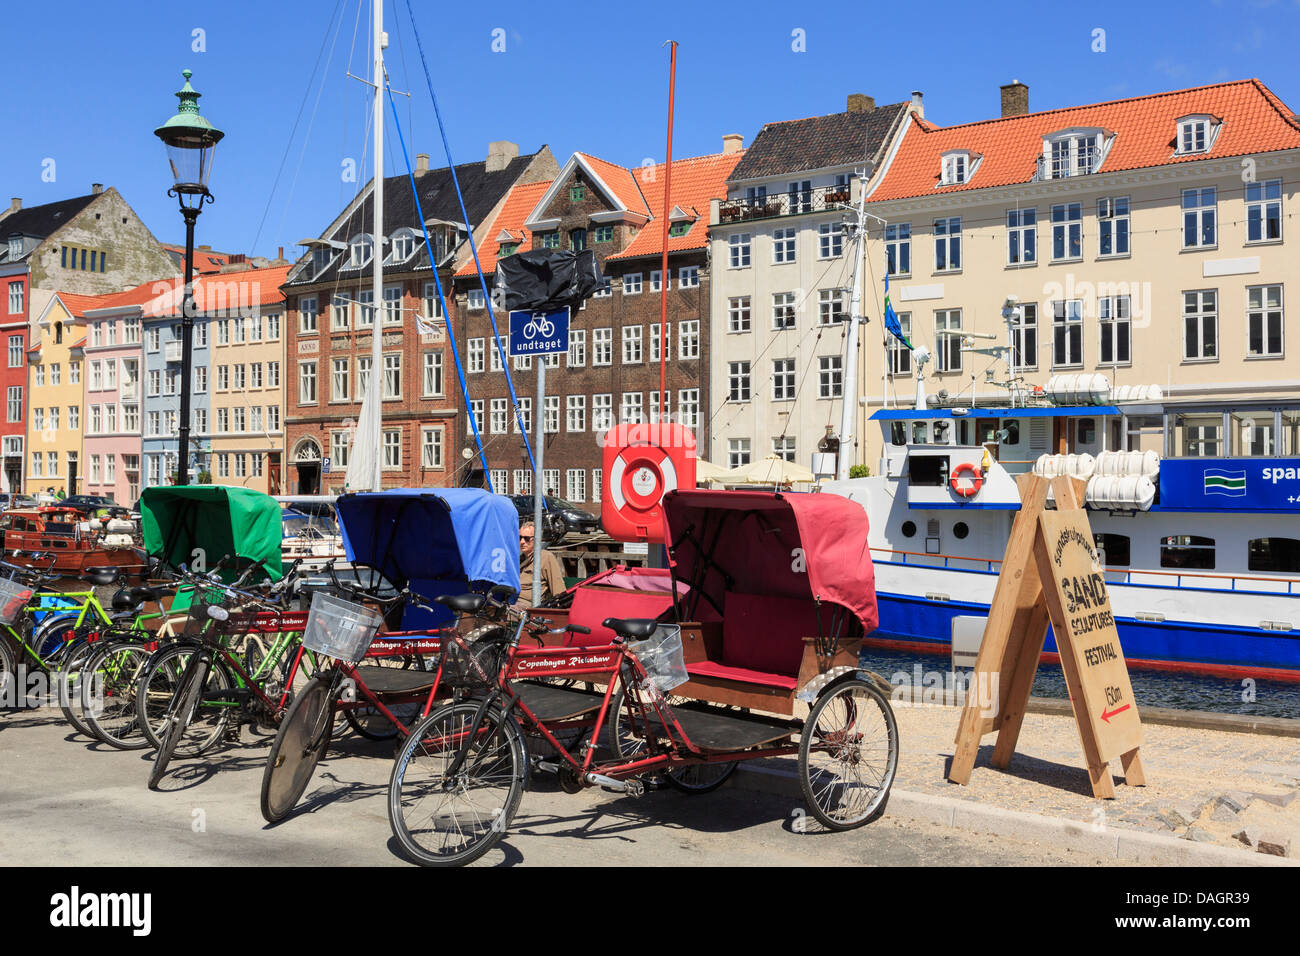 Tricycle rickshaws for city sightseeing tours in Nyhavn, Copenhagen, Zealand, Denmark Stock Photo